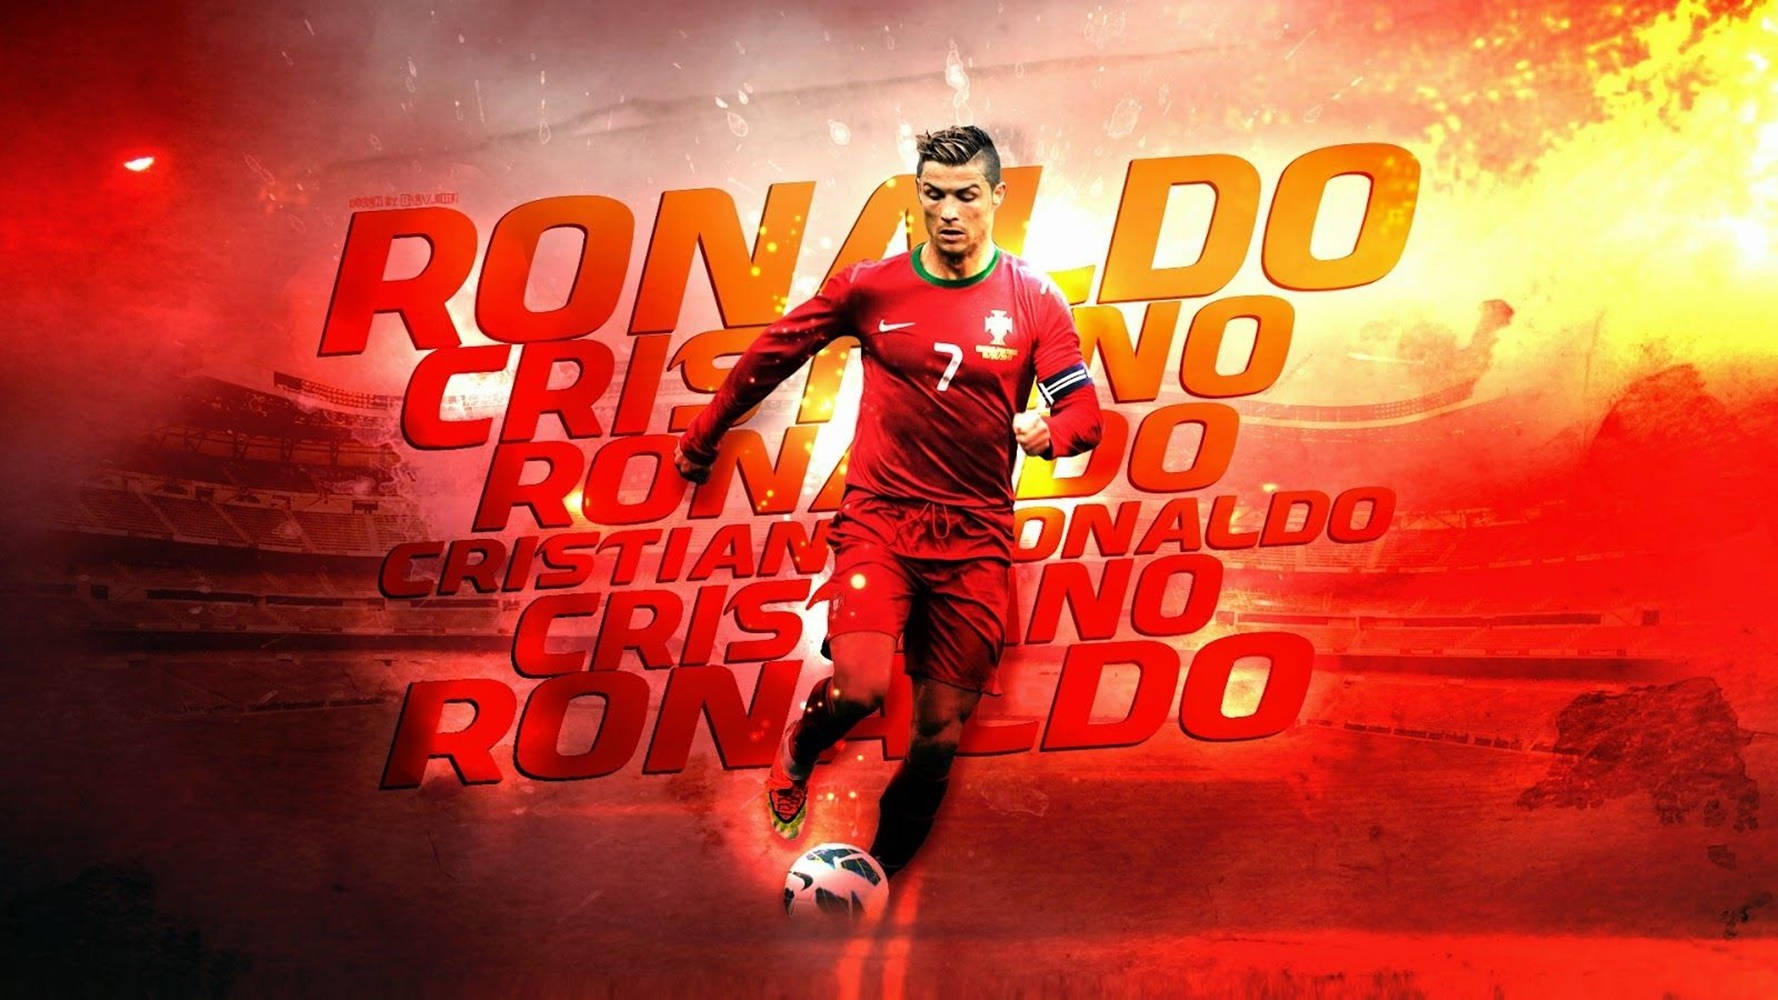 Cristiano Ronaldo Cool Fiery Red Graphic Artwork